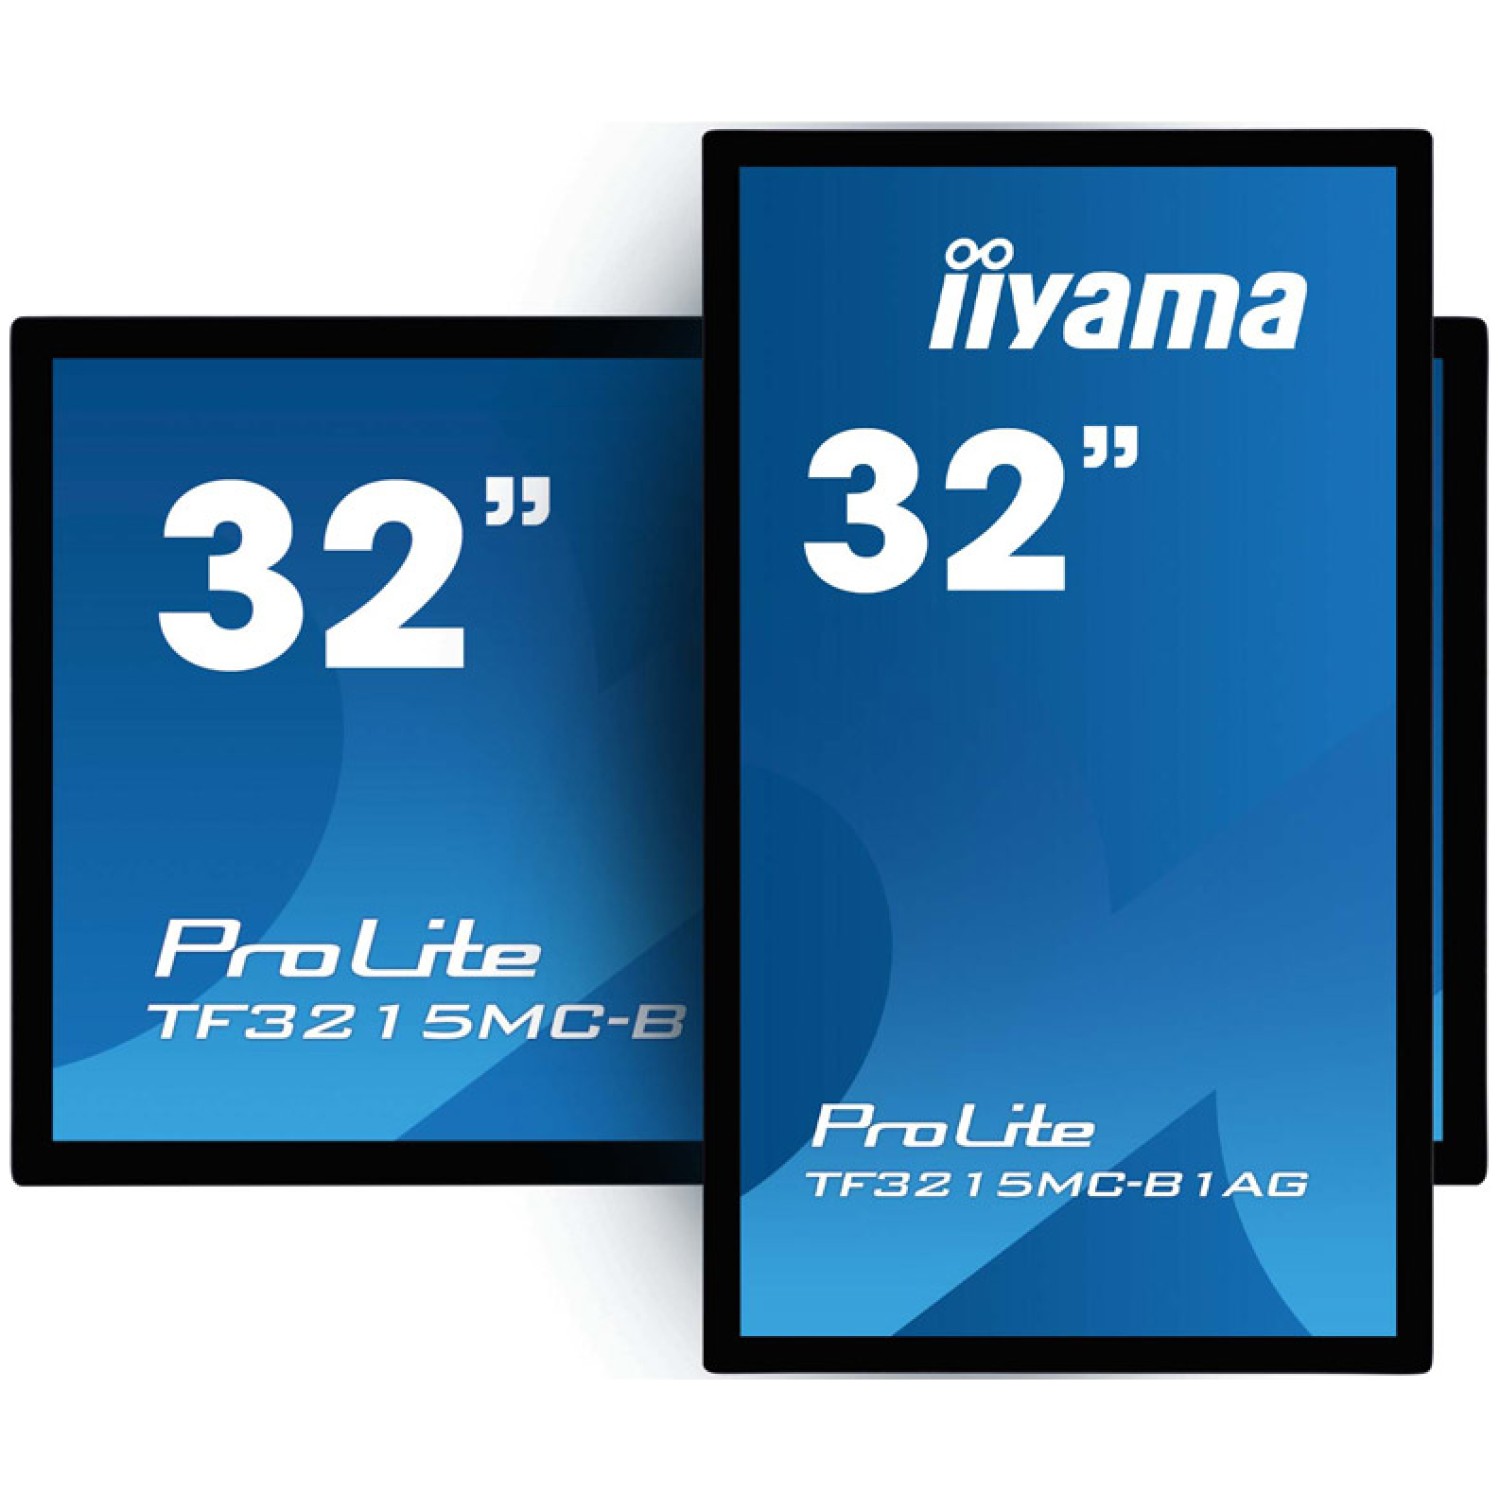 5'') FHD LED LCD AMVA3 24/7 PCAP open frame na dotik informacijski / interaktivni monitor